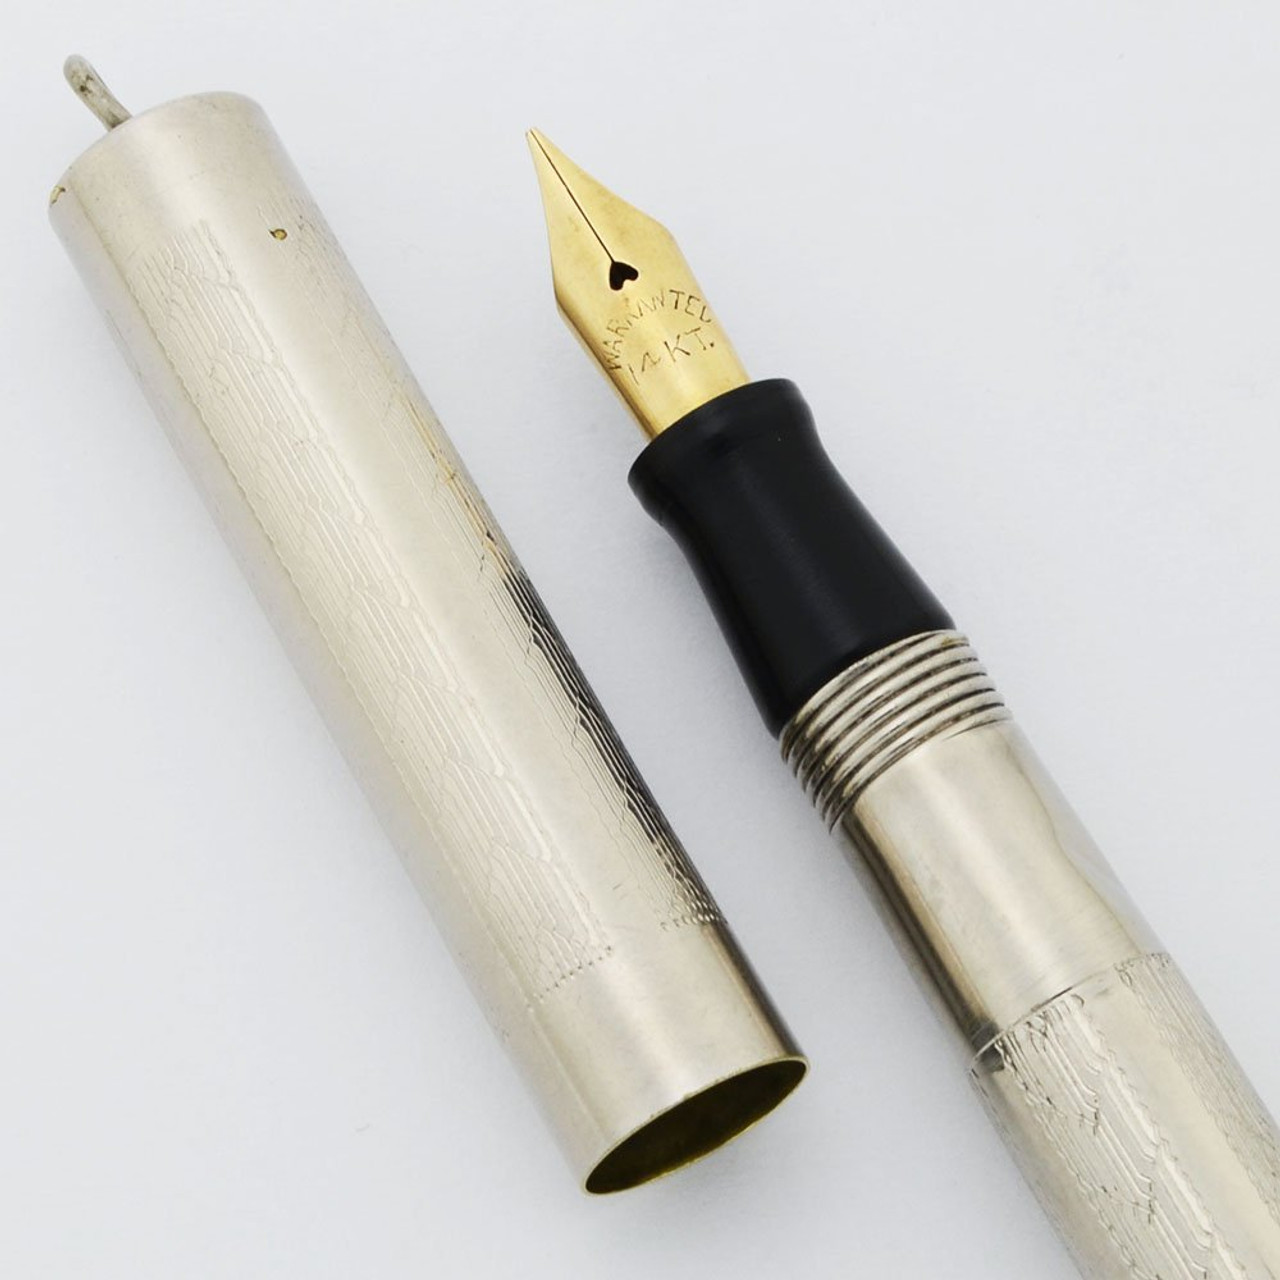 Unknown Ringtop Fountain Pen (1920s) - Silver Plated, Dart Pattern, Flex Fine #2 Nib (Excellent, Restored)